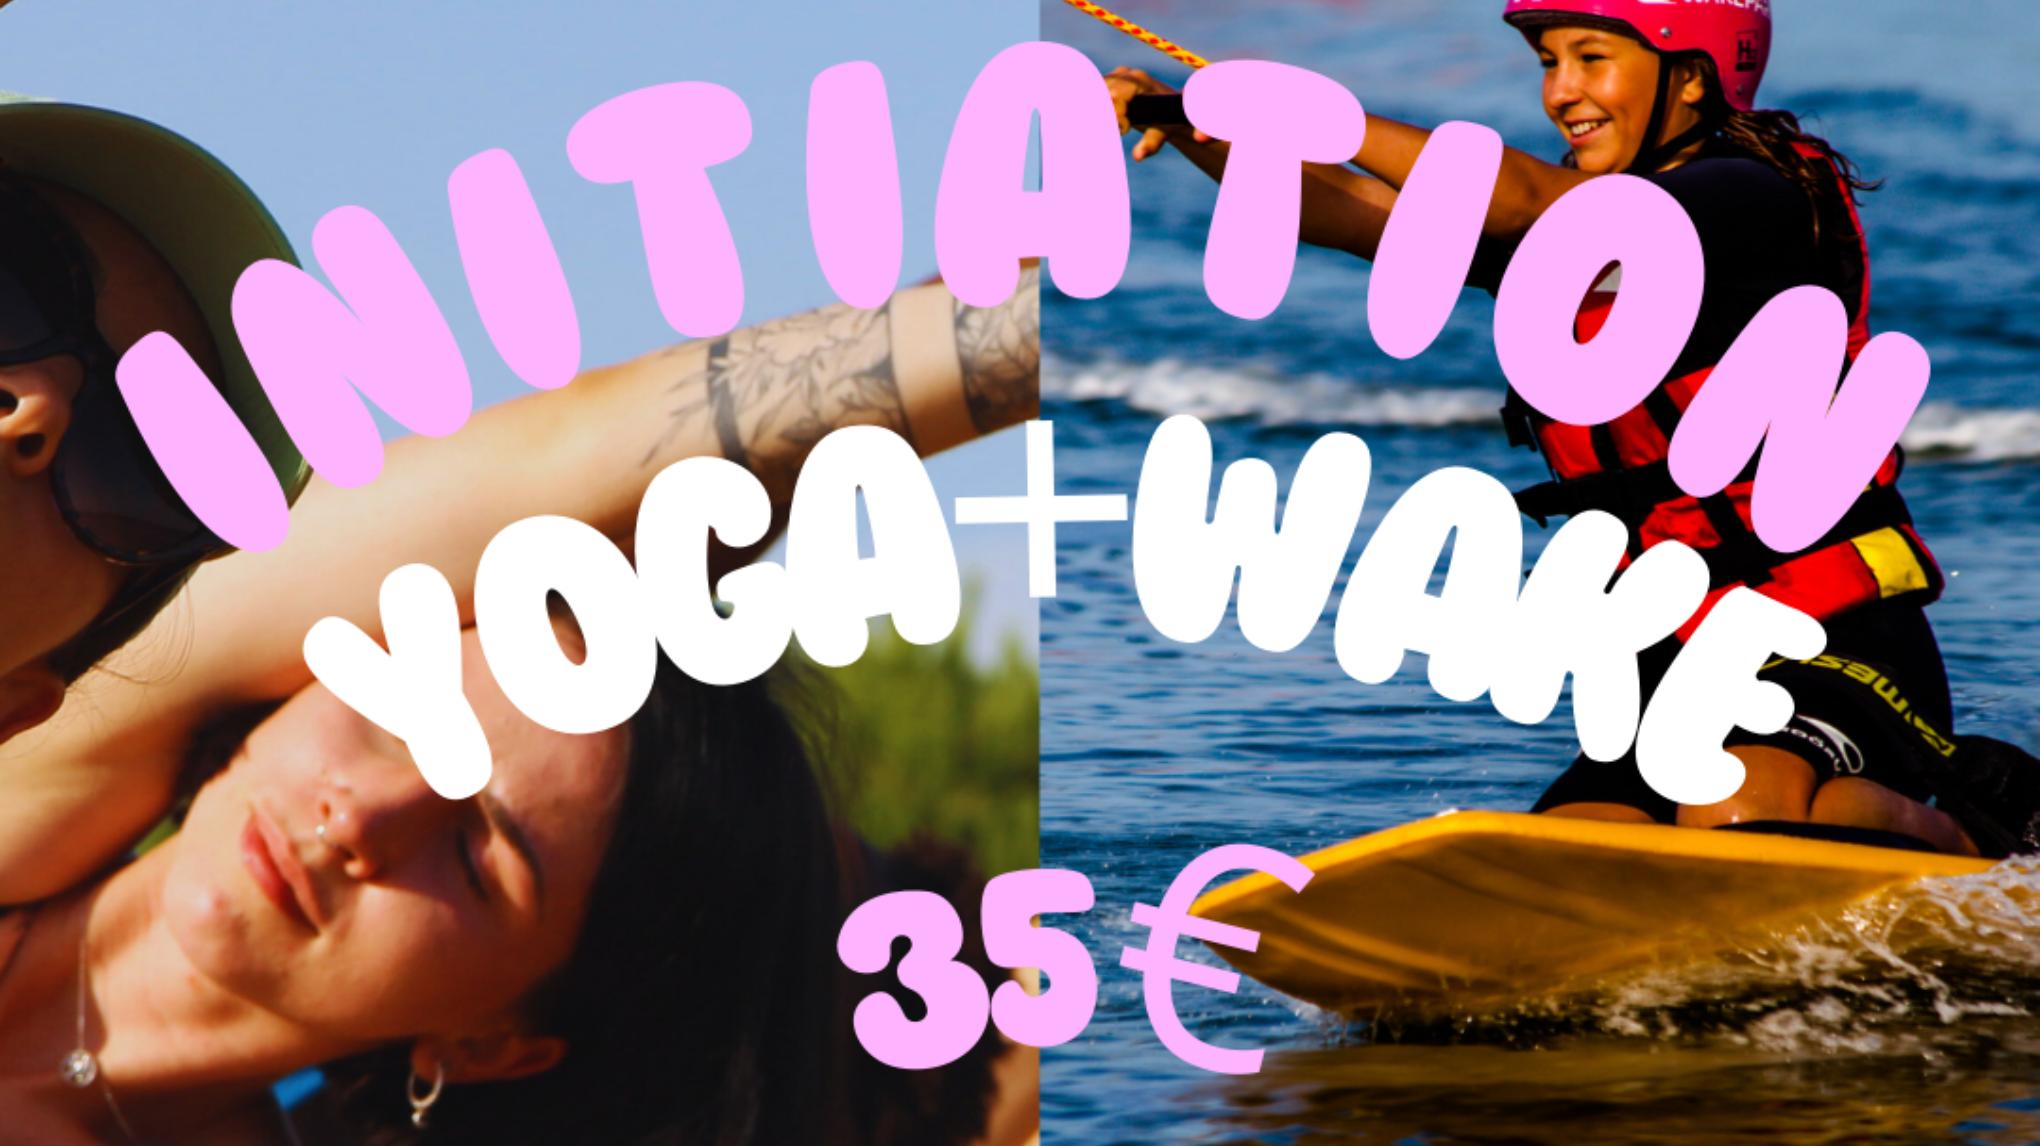 Initiation yoga + wake à Atlantic wake park 35 euros